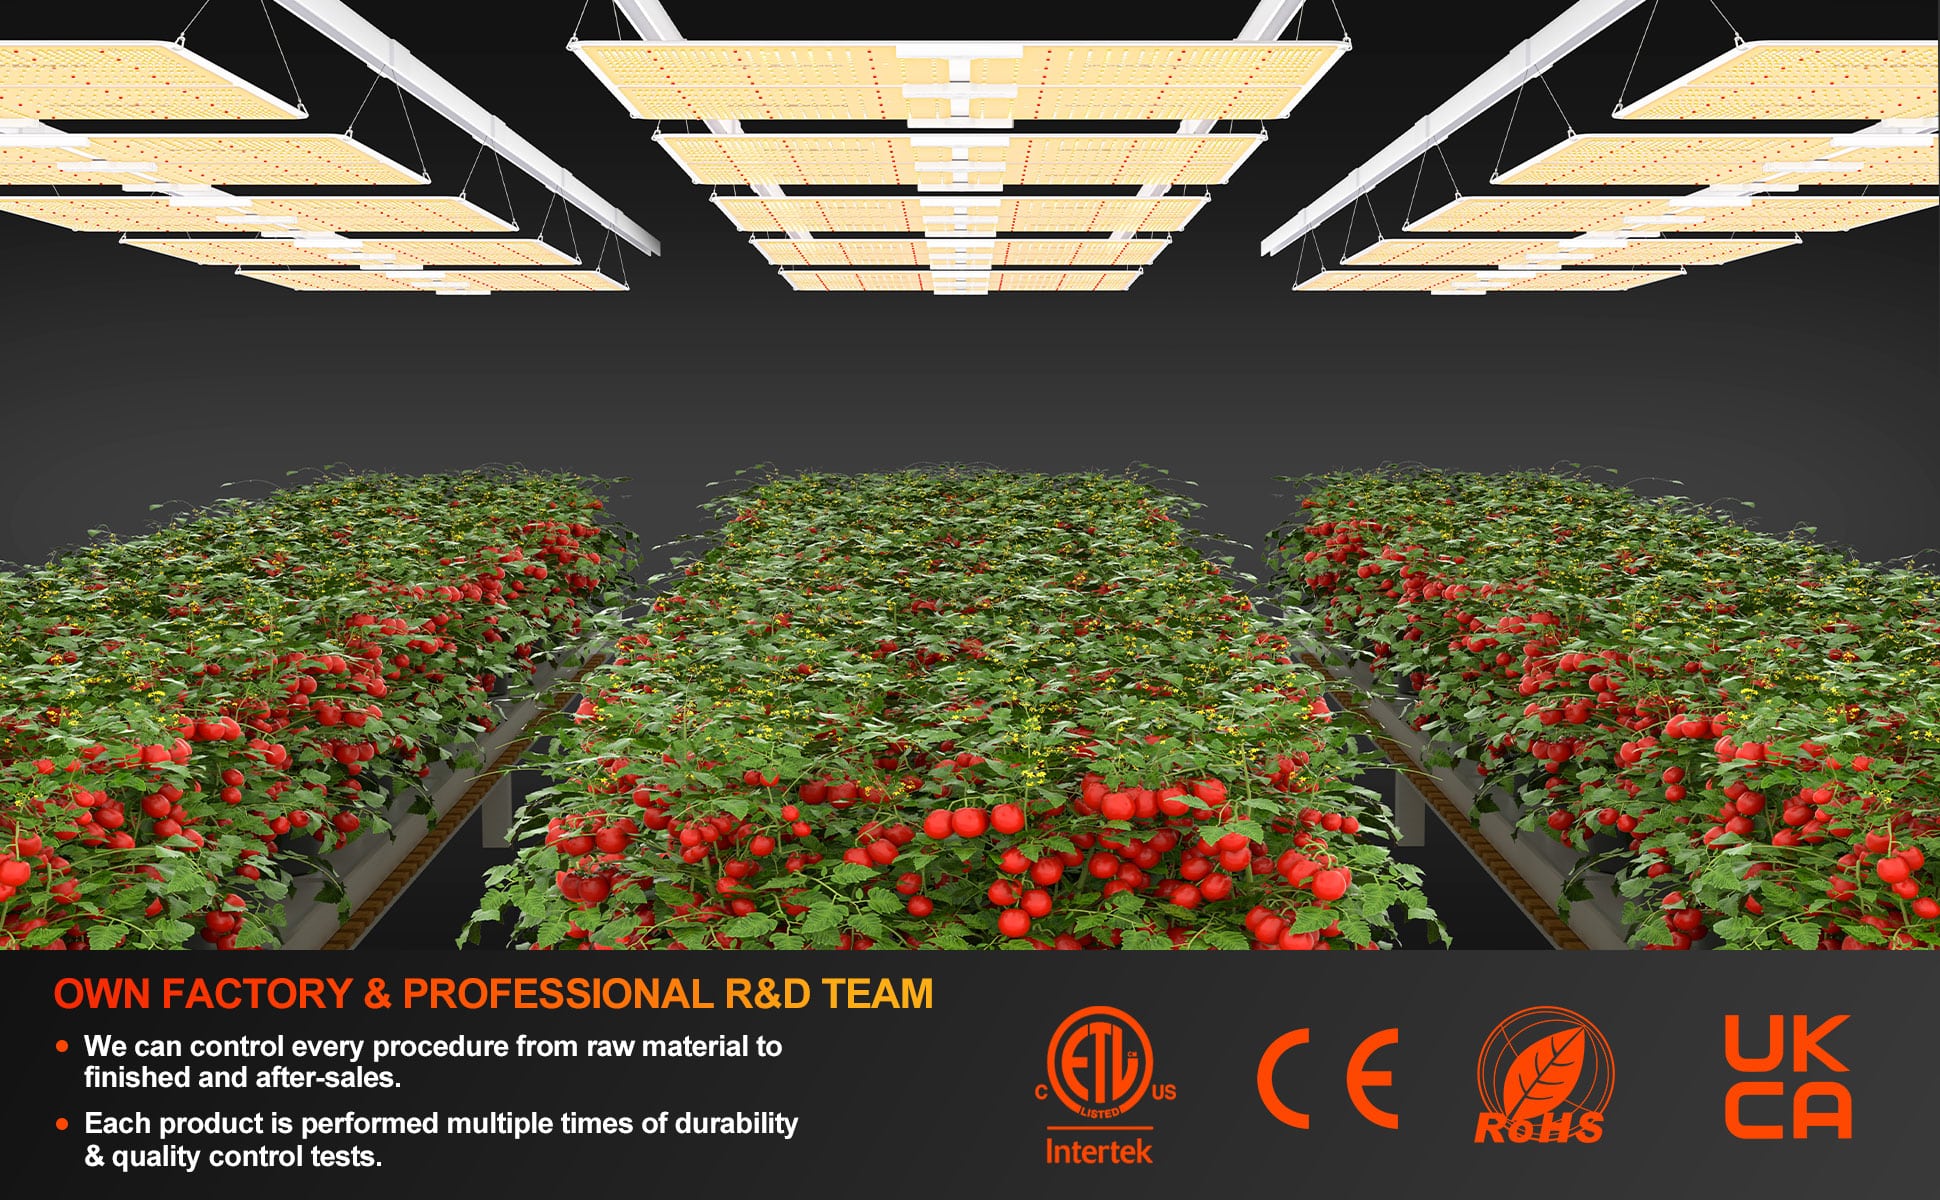 Spider Farmer® sf series 4000 led grow light professional r&d team